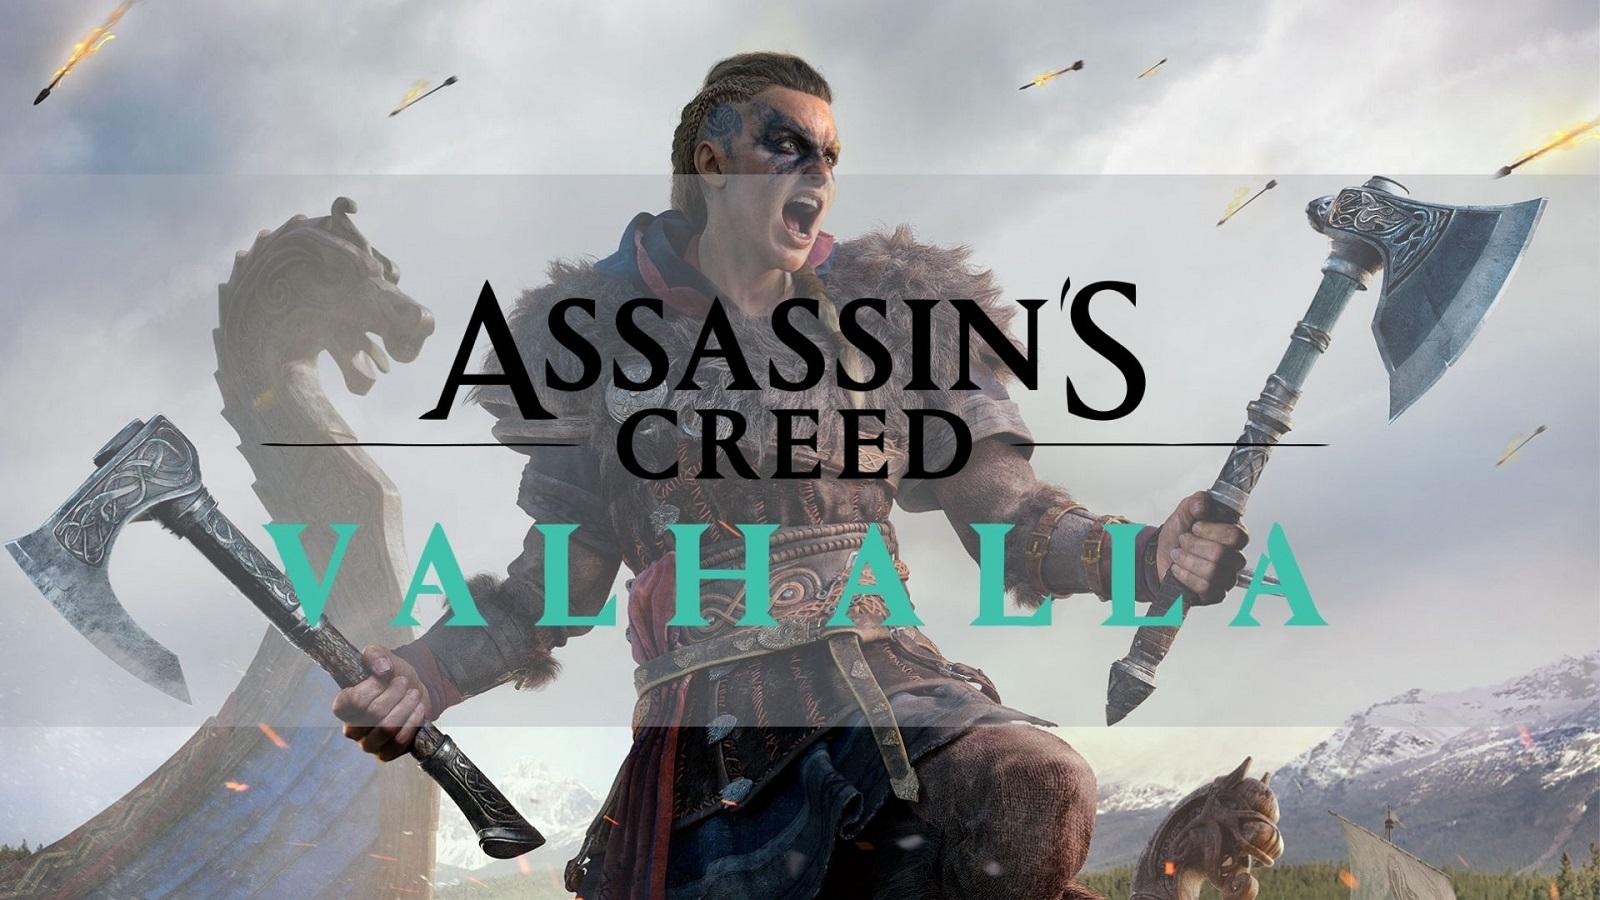 Assassin's Creed Valhalla official art